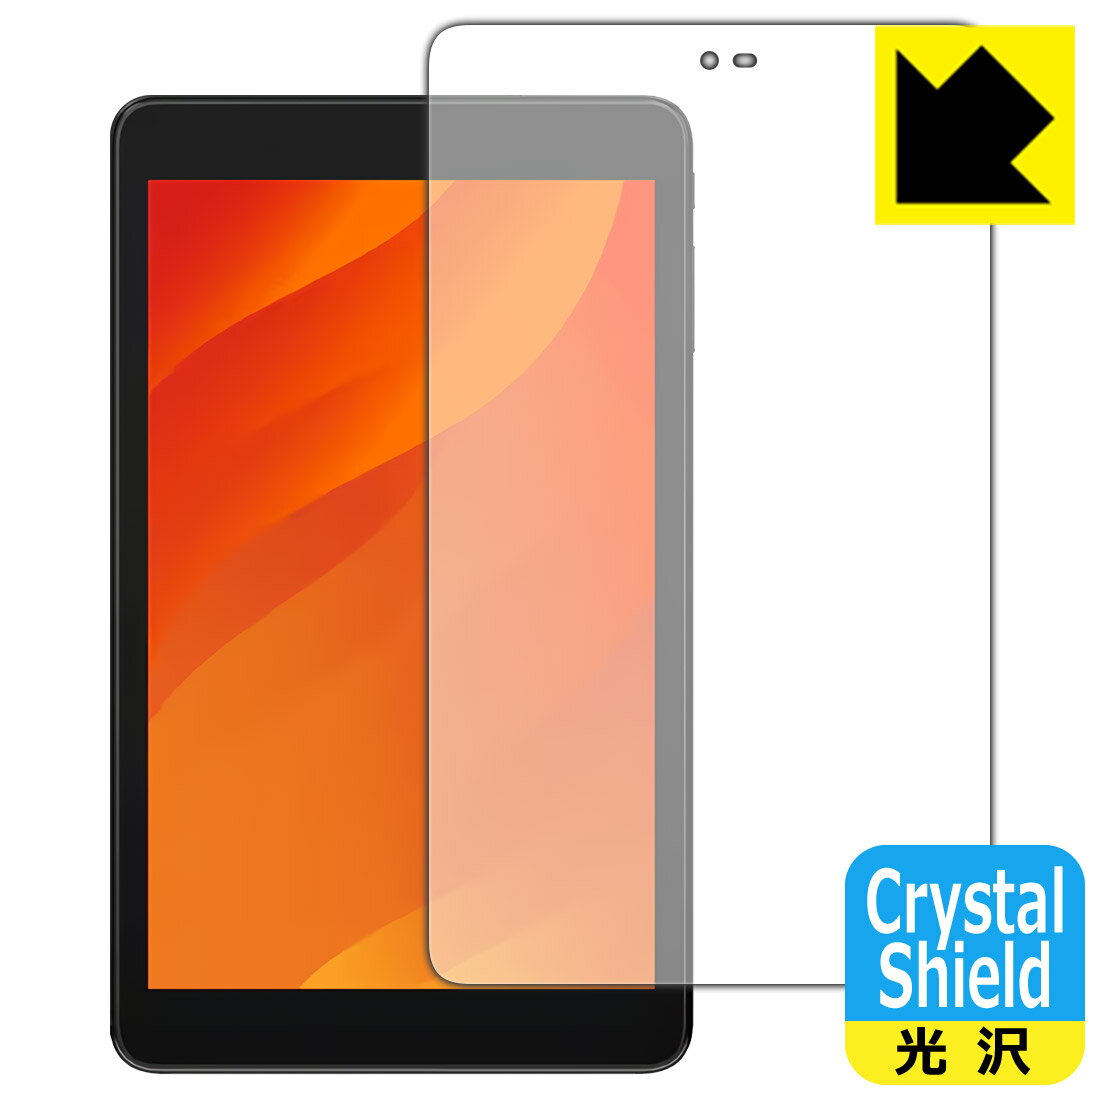 Crystal Shield【光沢】保護フィルム LUCA Tablet 8インチ TE084M4V1-B (3枚セット) 日本製 自社製造直販